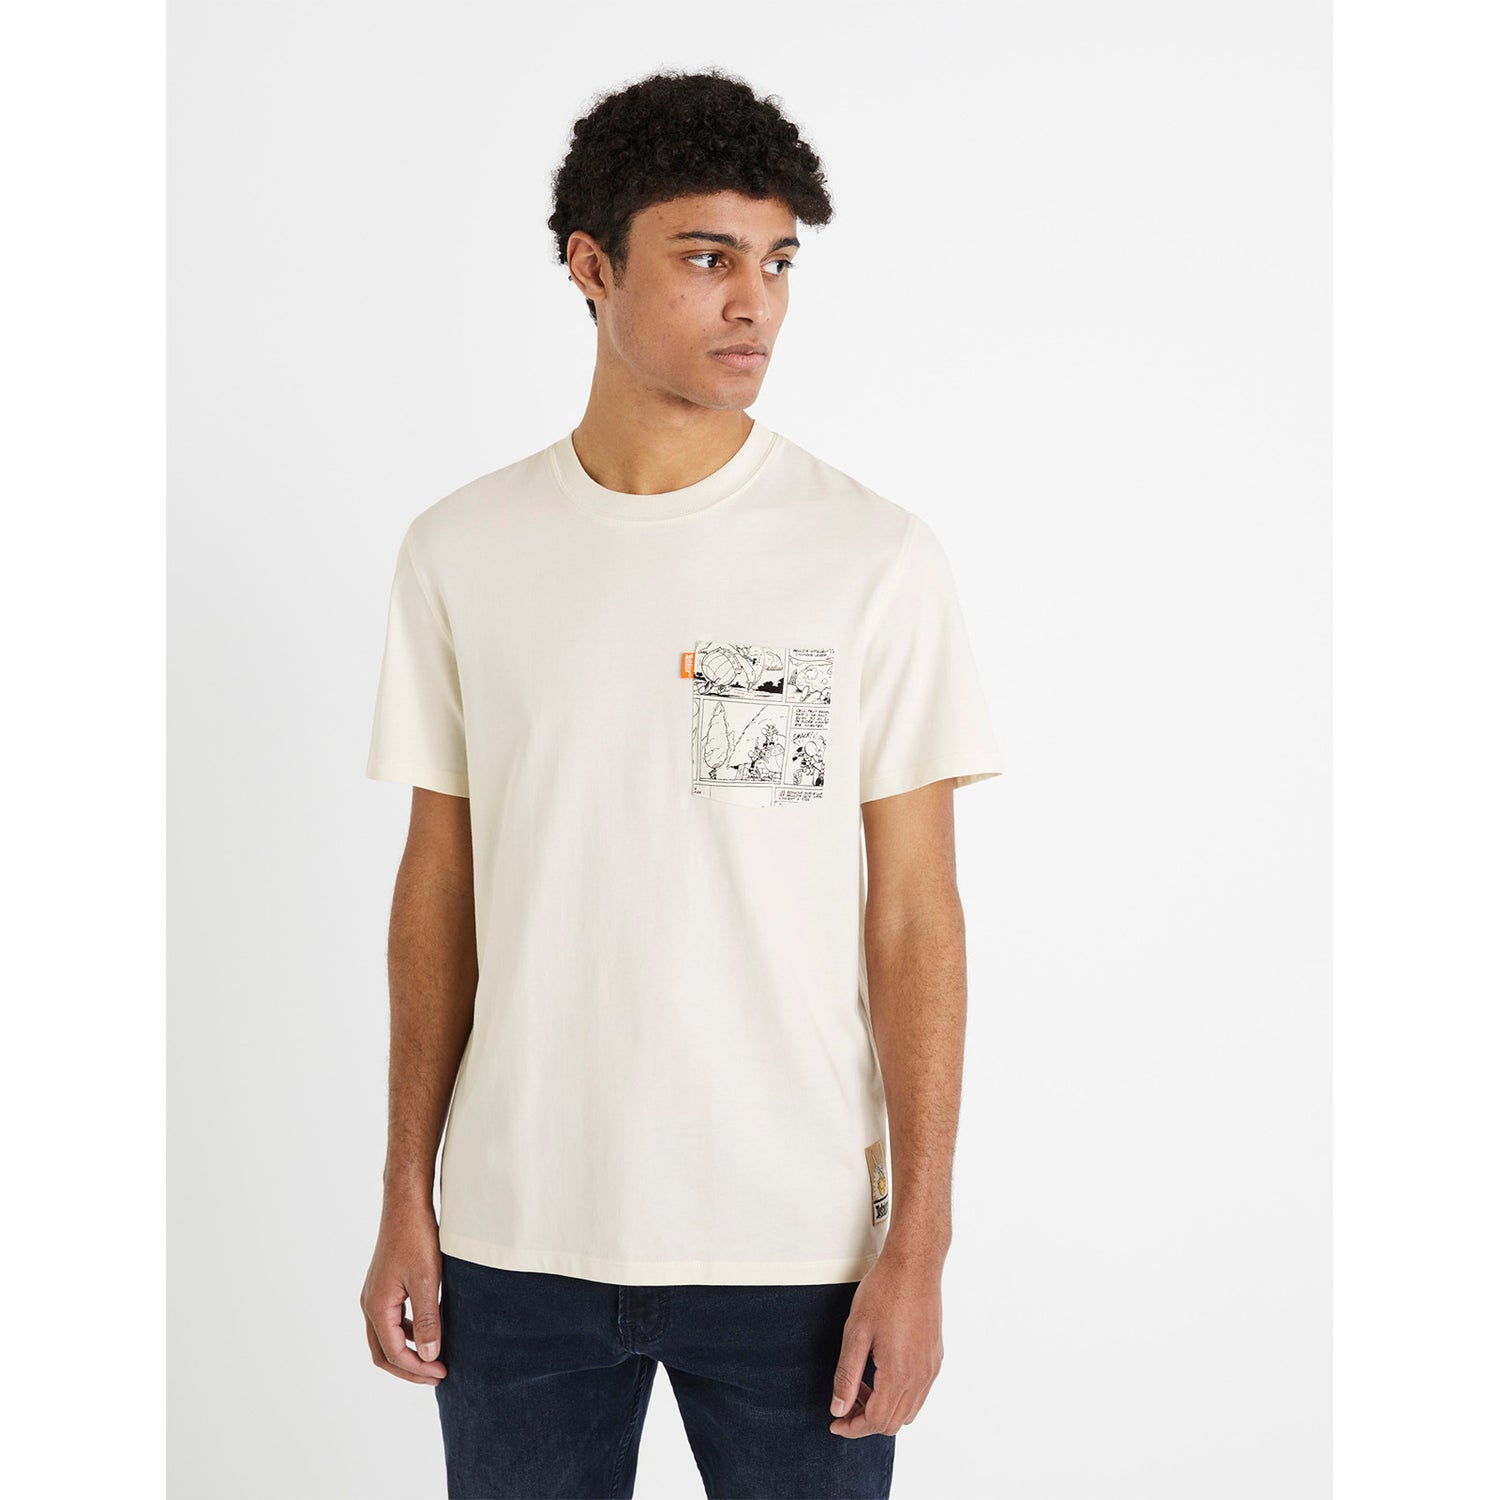 Asterix - Off-White Printed Round Neck Cotton T-shirt (LDEASTE1)